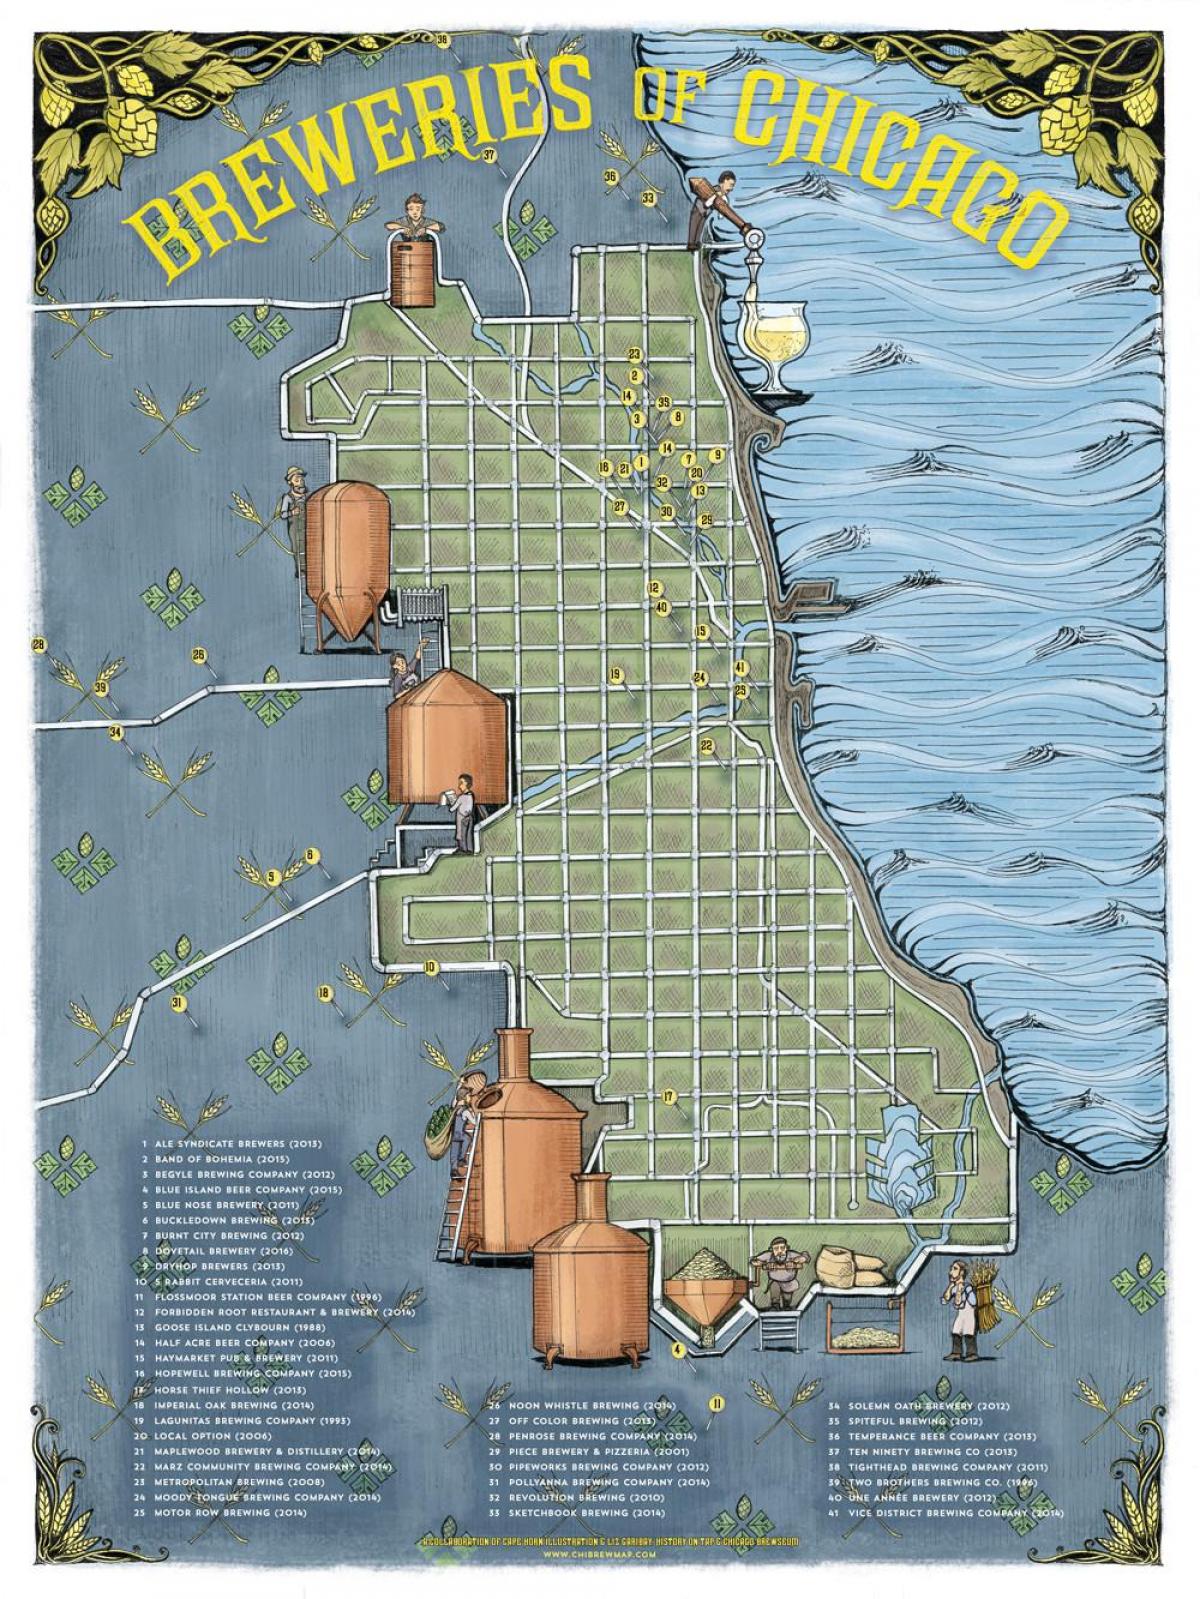 Chicago cervexa mapa